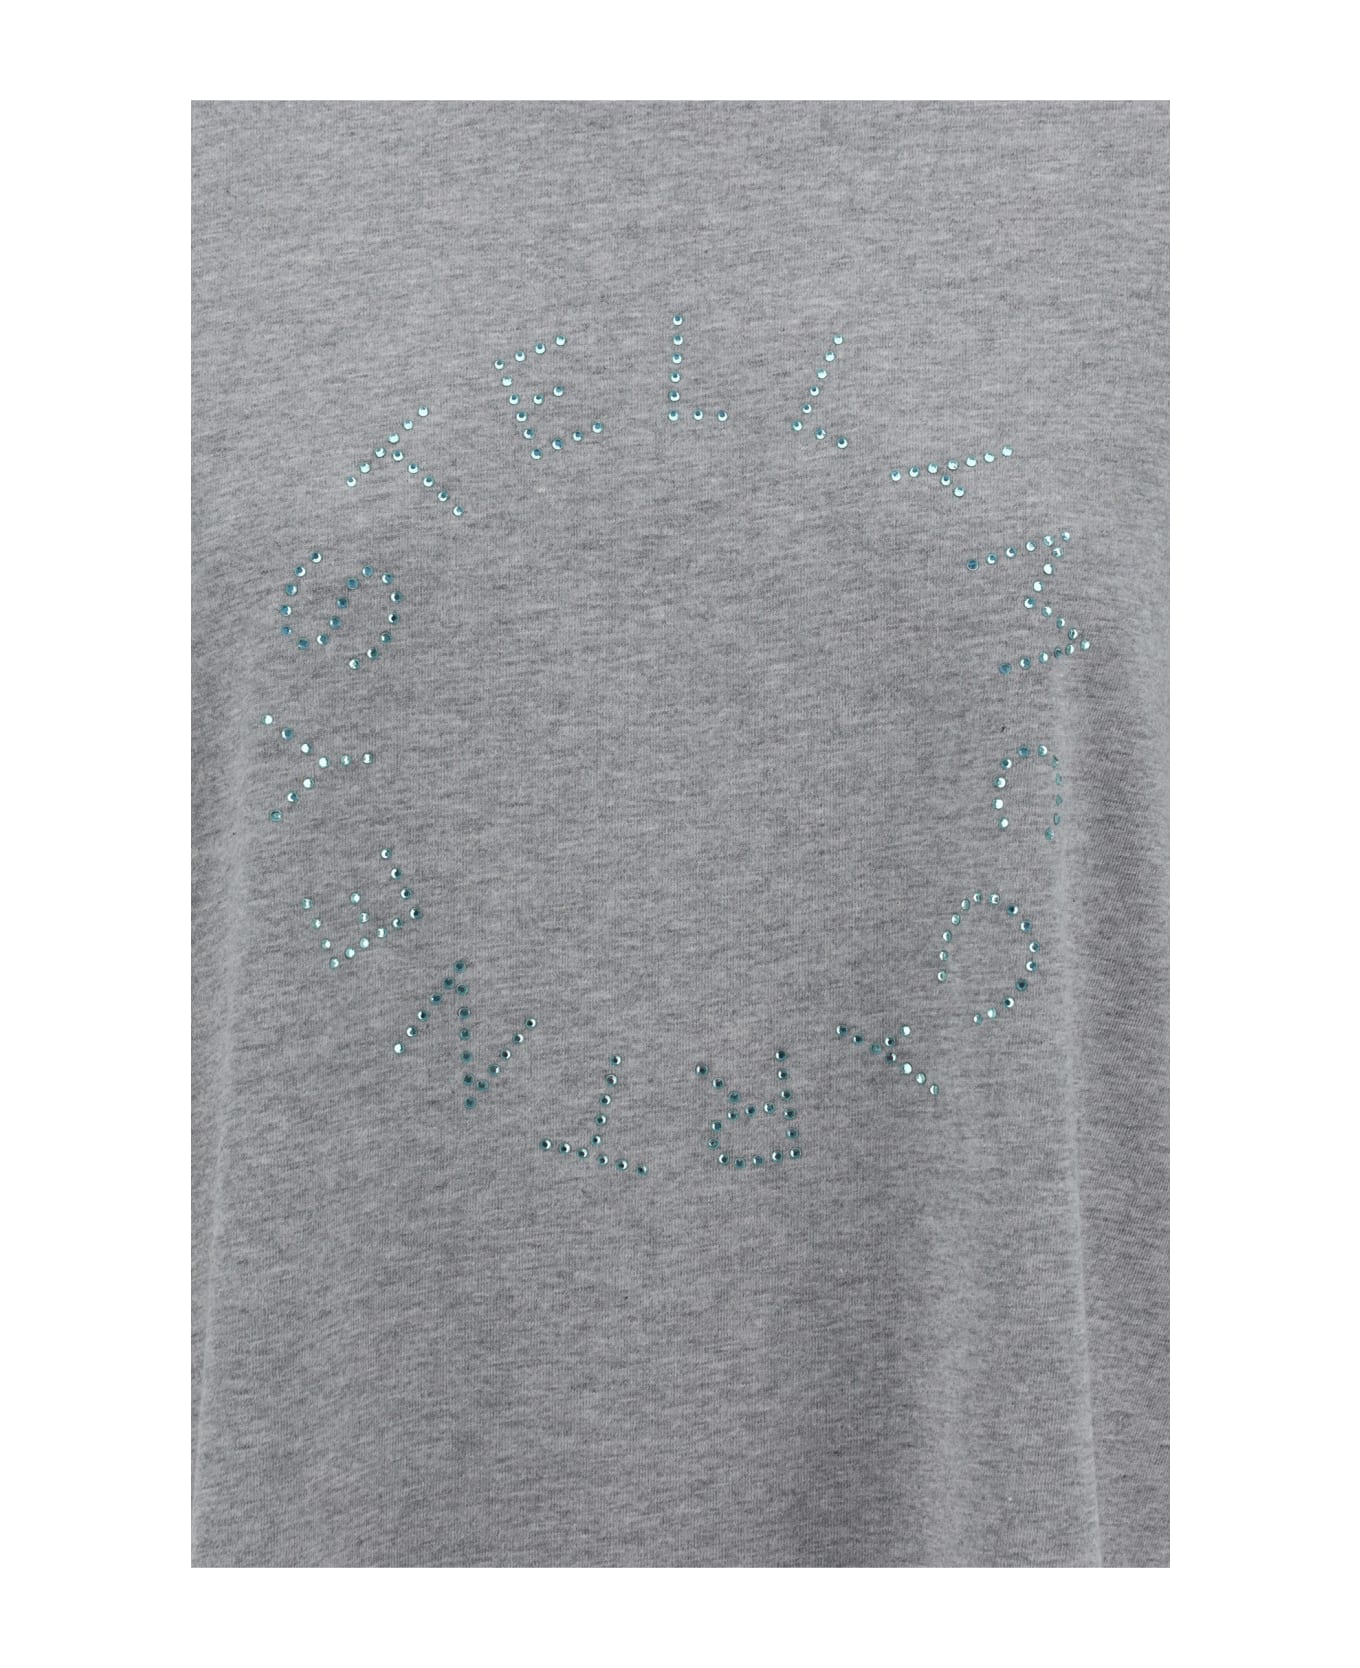 Stella McCartney Rhinestone T-shirt - Grey Melange Tシャツ